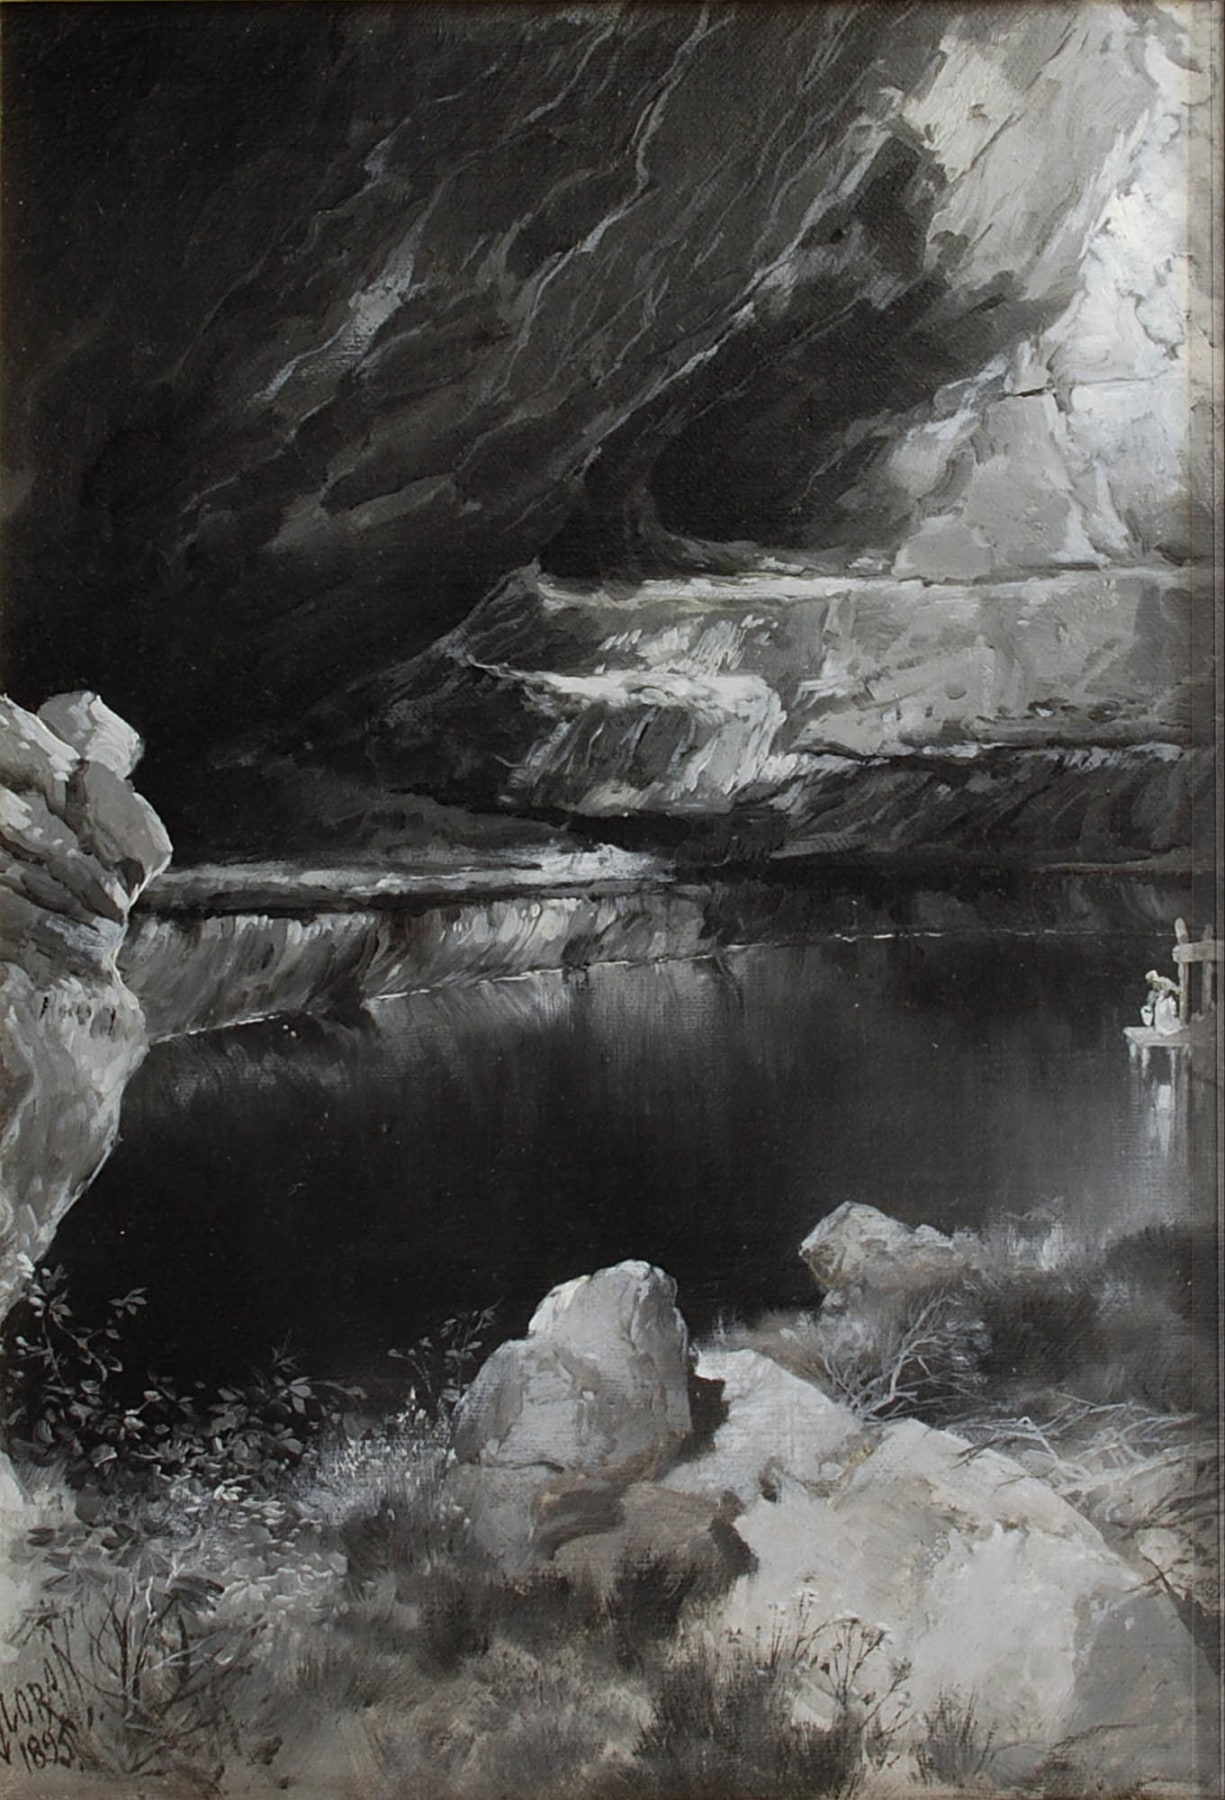 Thomas Moran, Water Caves at Kanab, Utah, 1895